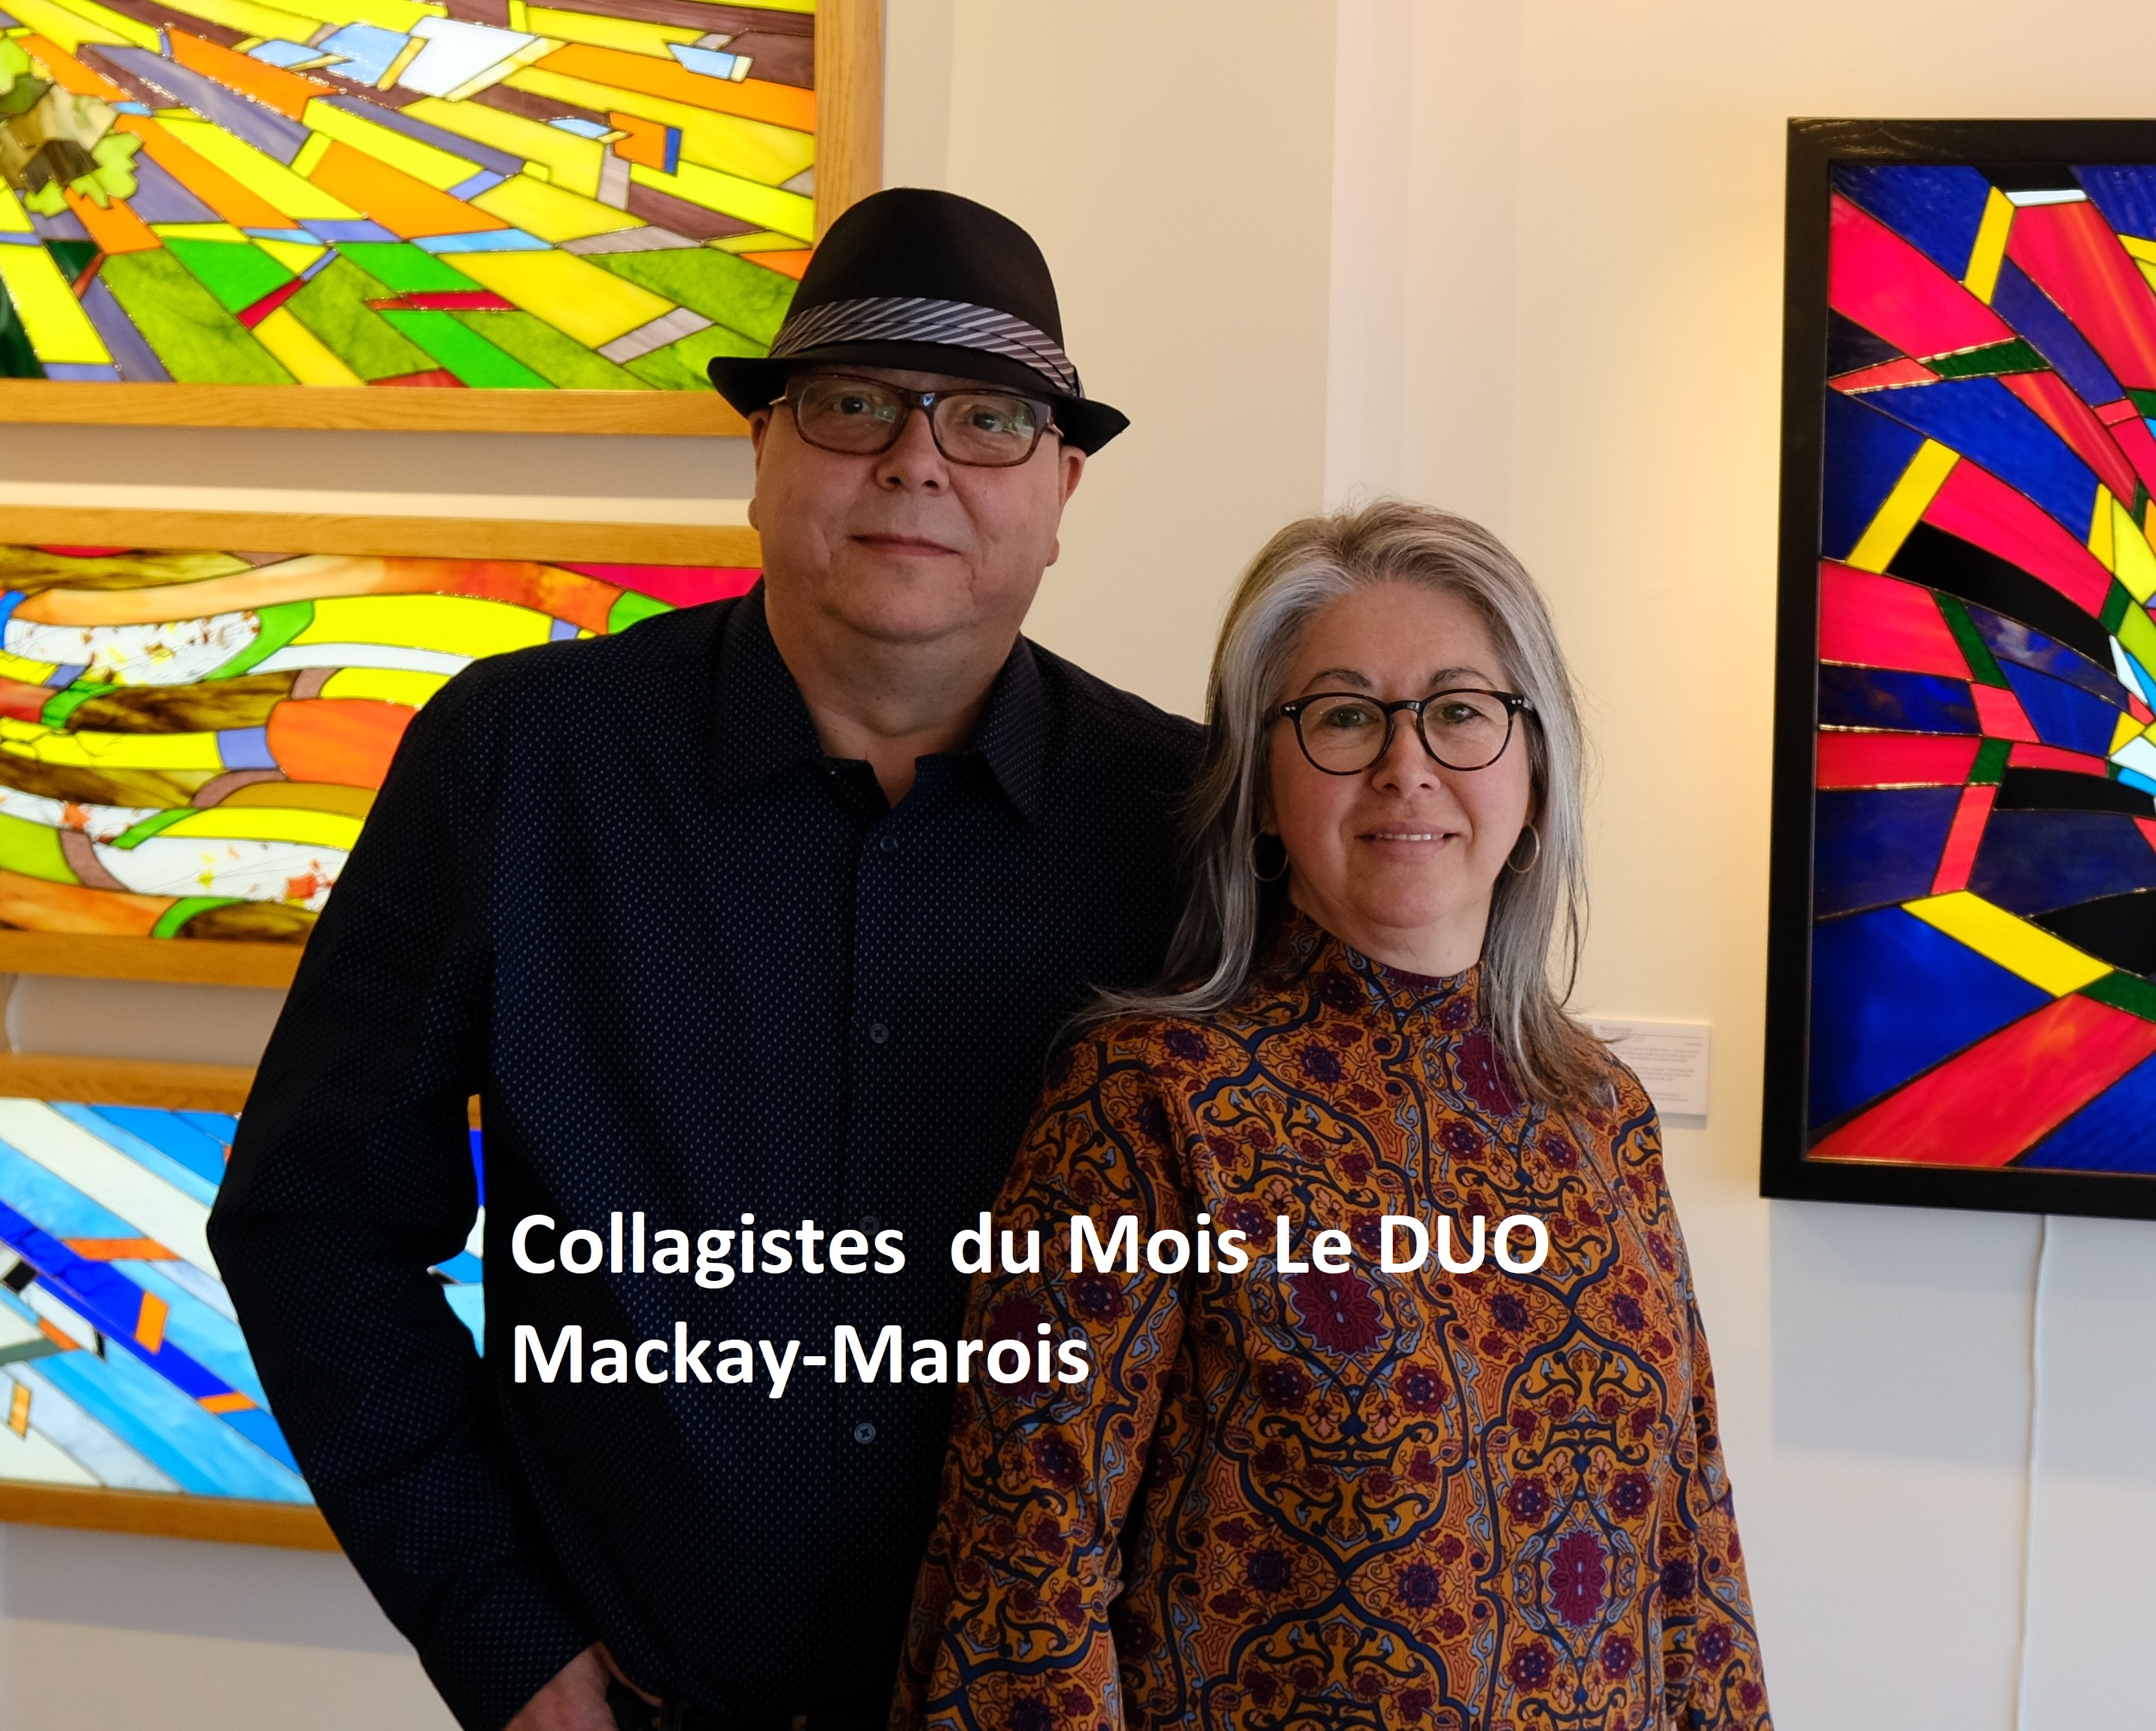 The duo Mackay / Marois